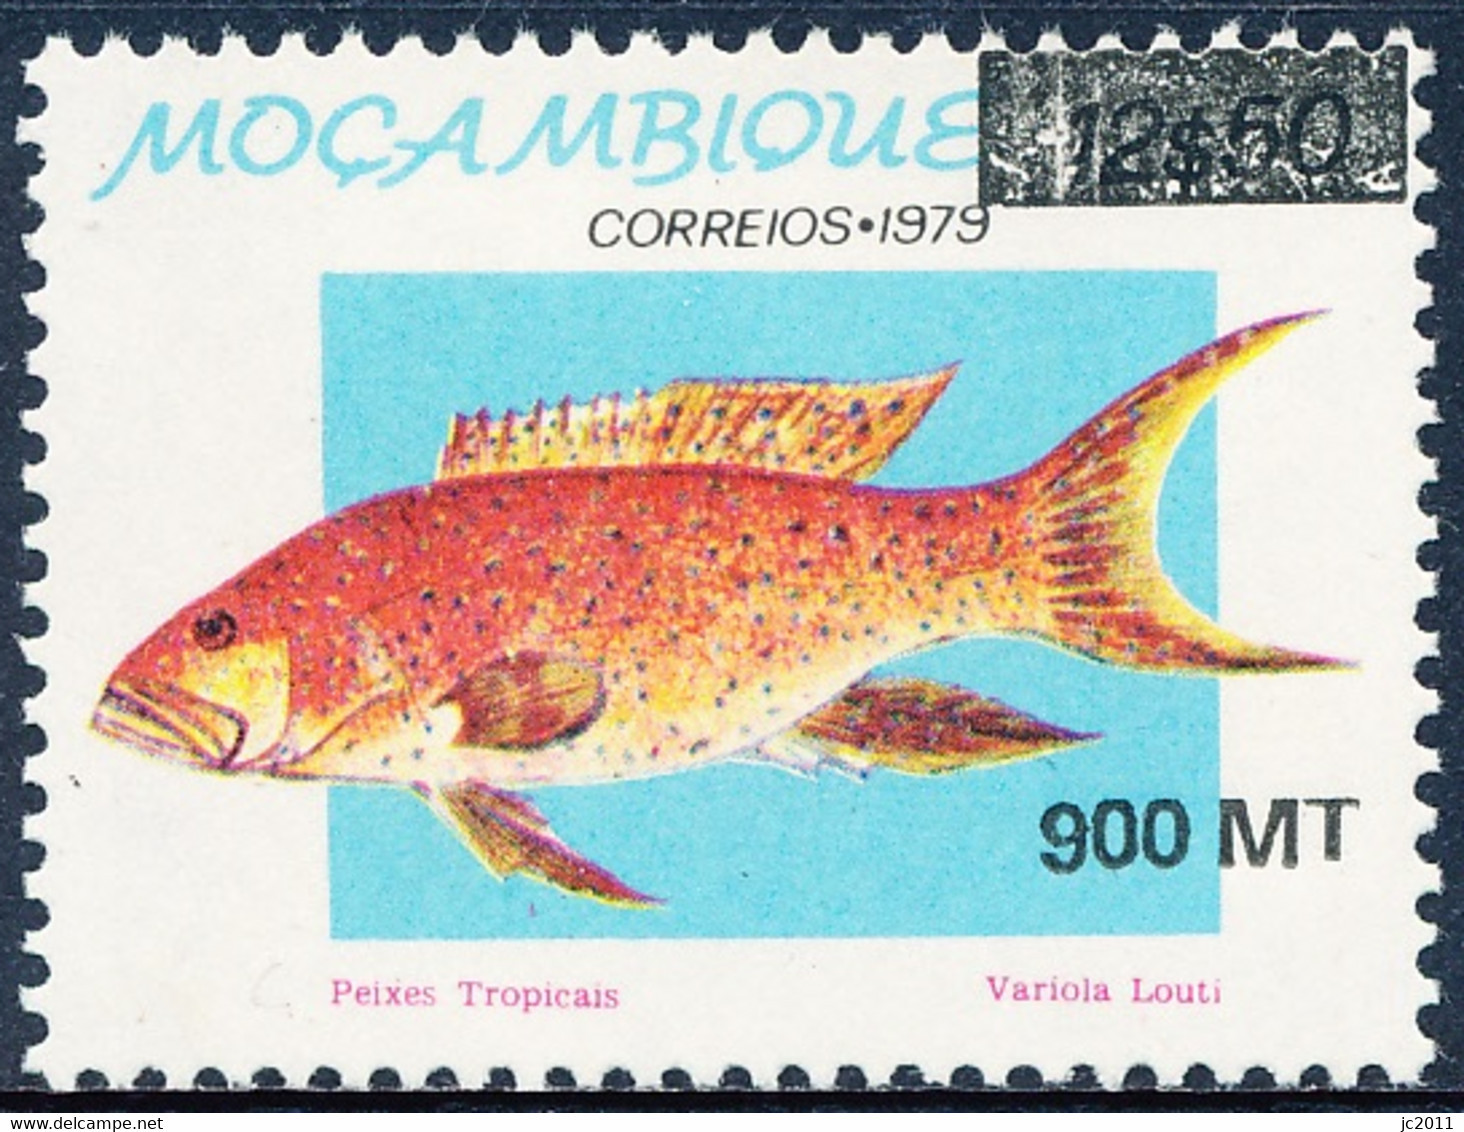 Mozambique - 1995 - 1979 Type - Tropical Fishes - MNH - Mozambique